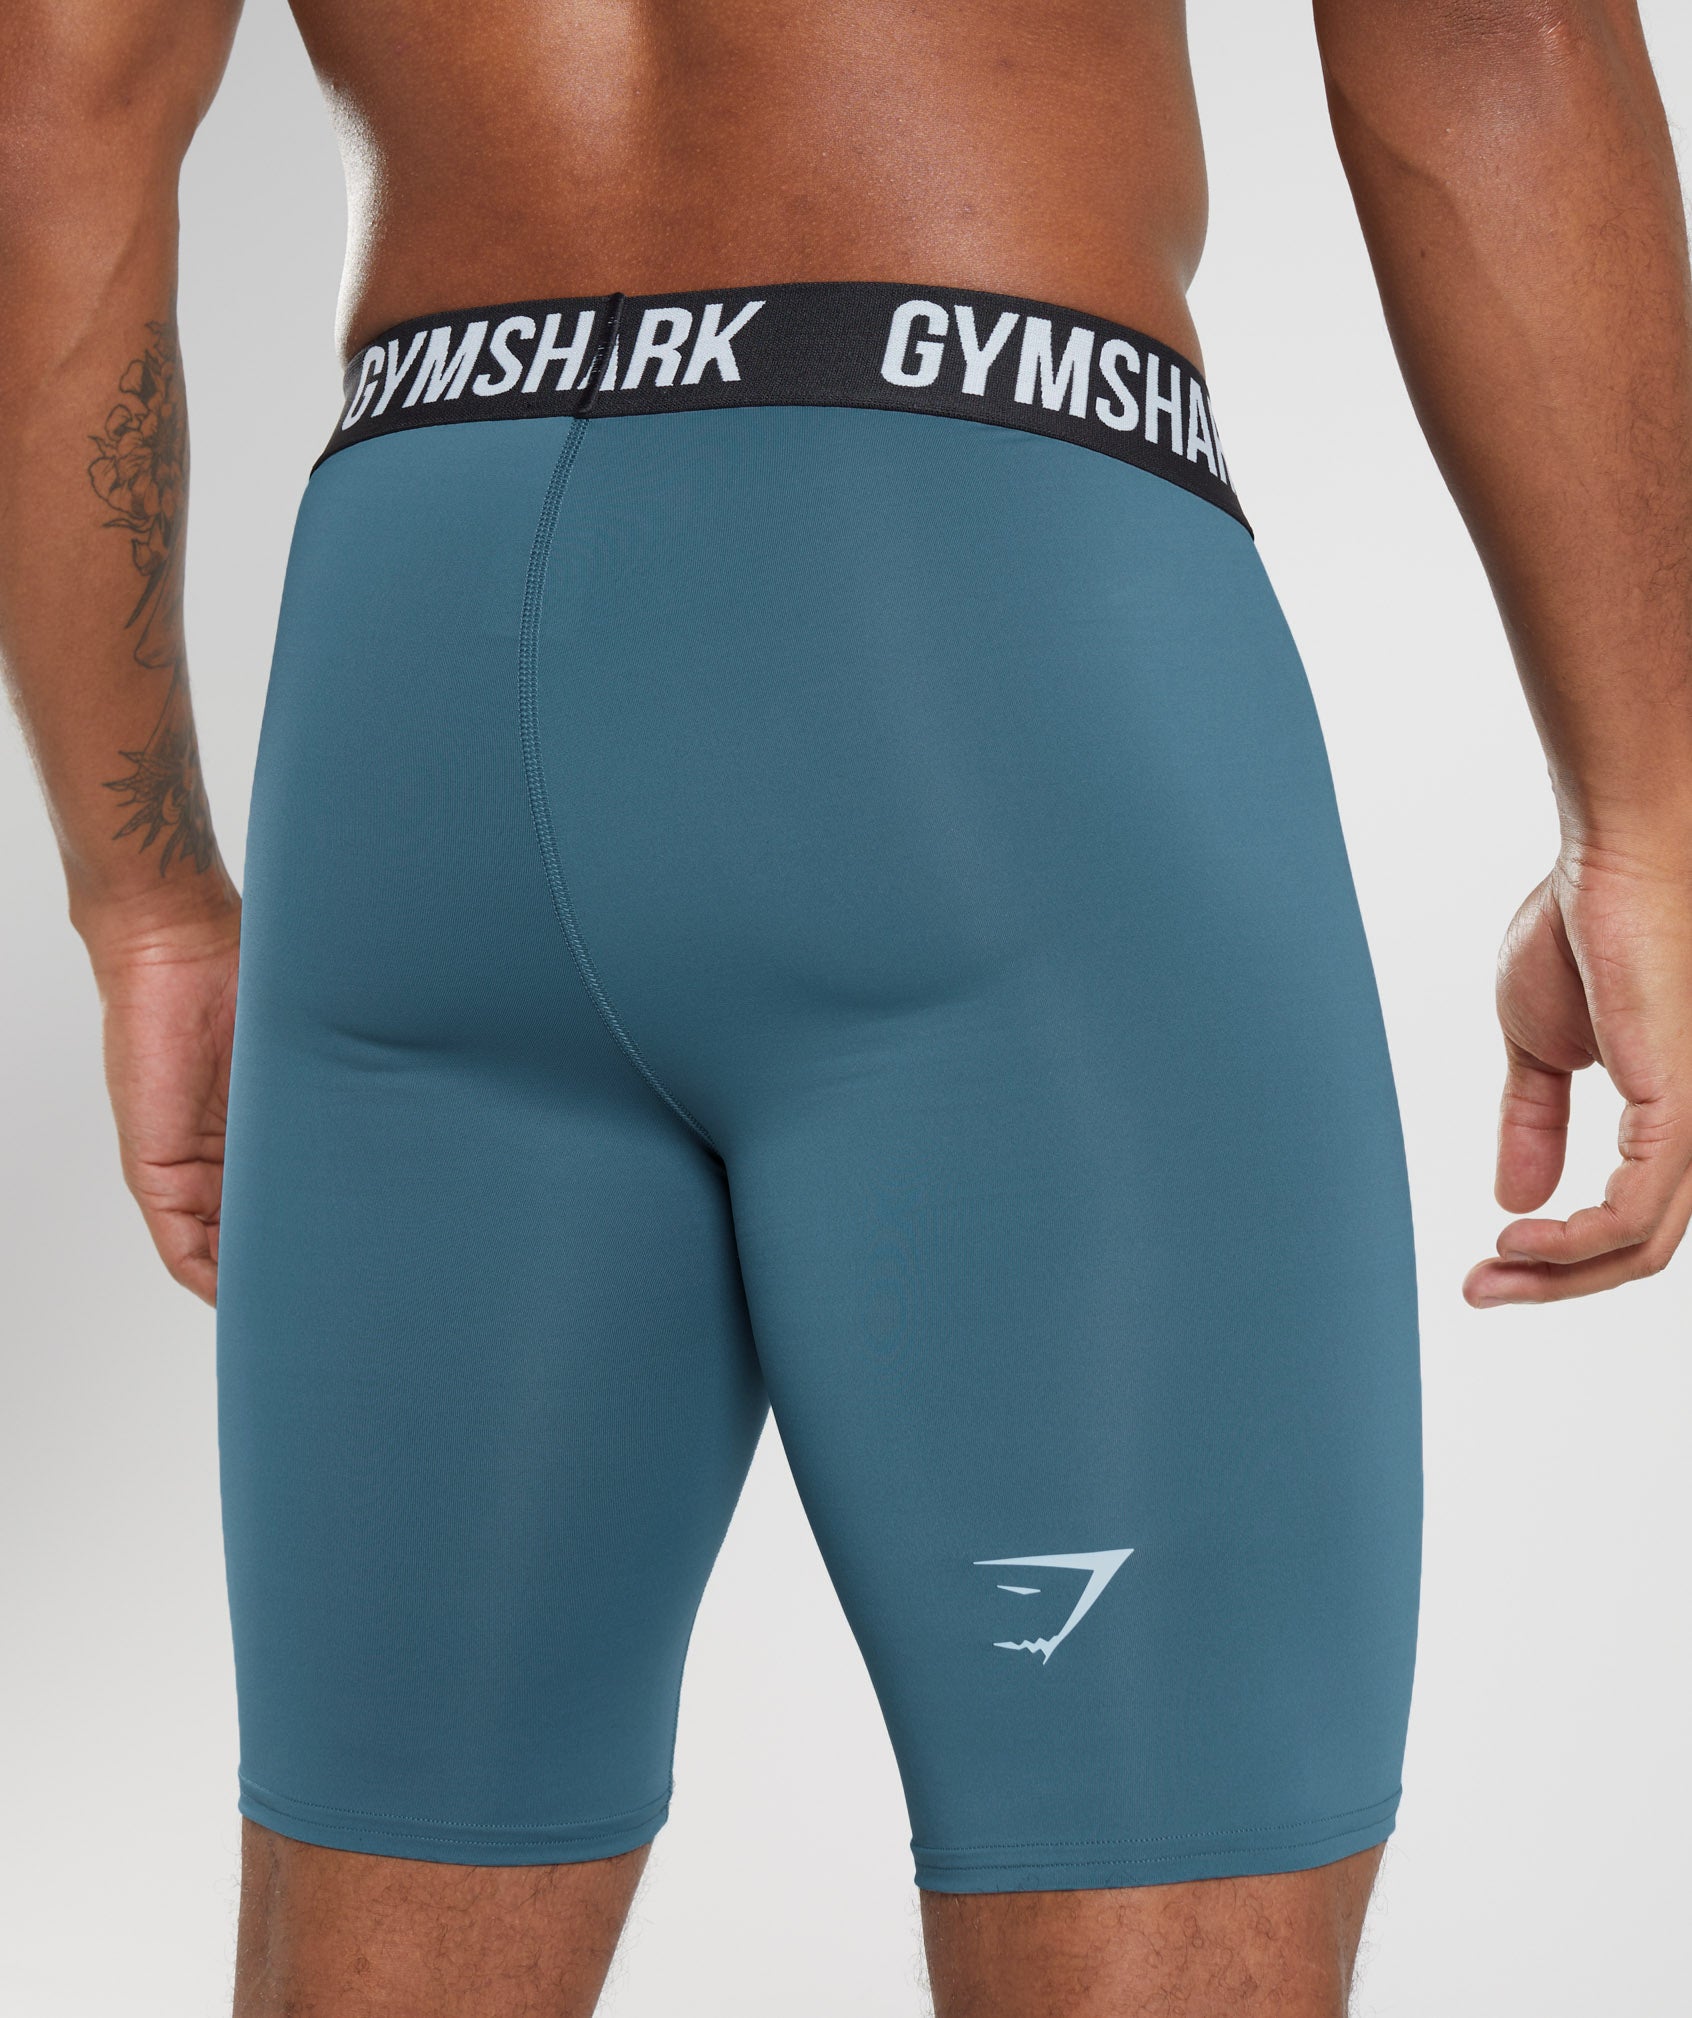 Gymshark Element Baselayer Shorts - Tuscan Teal